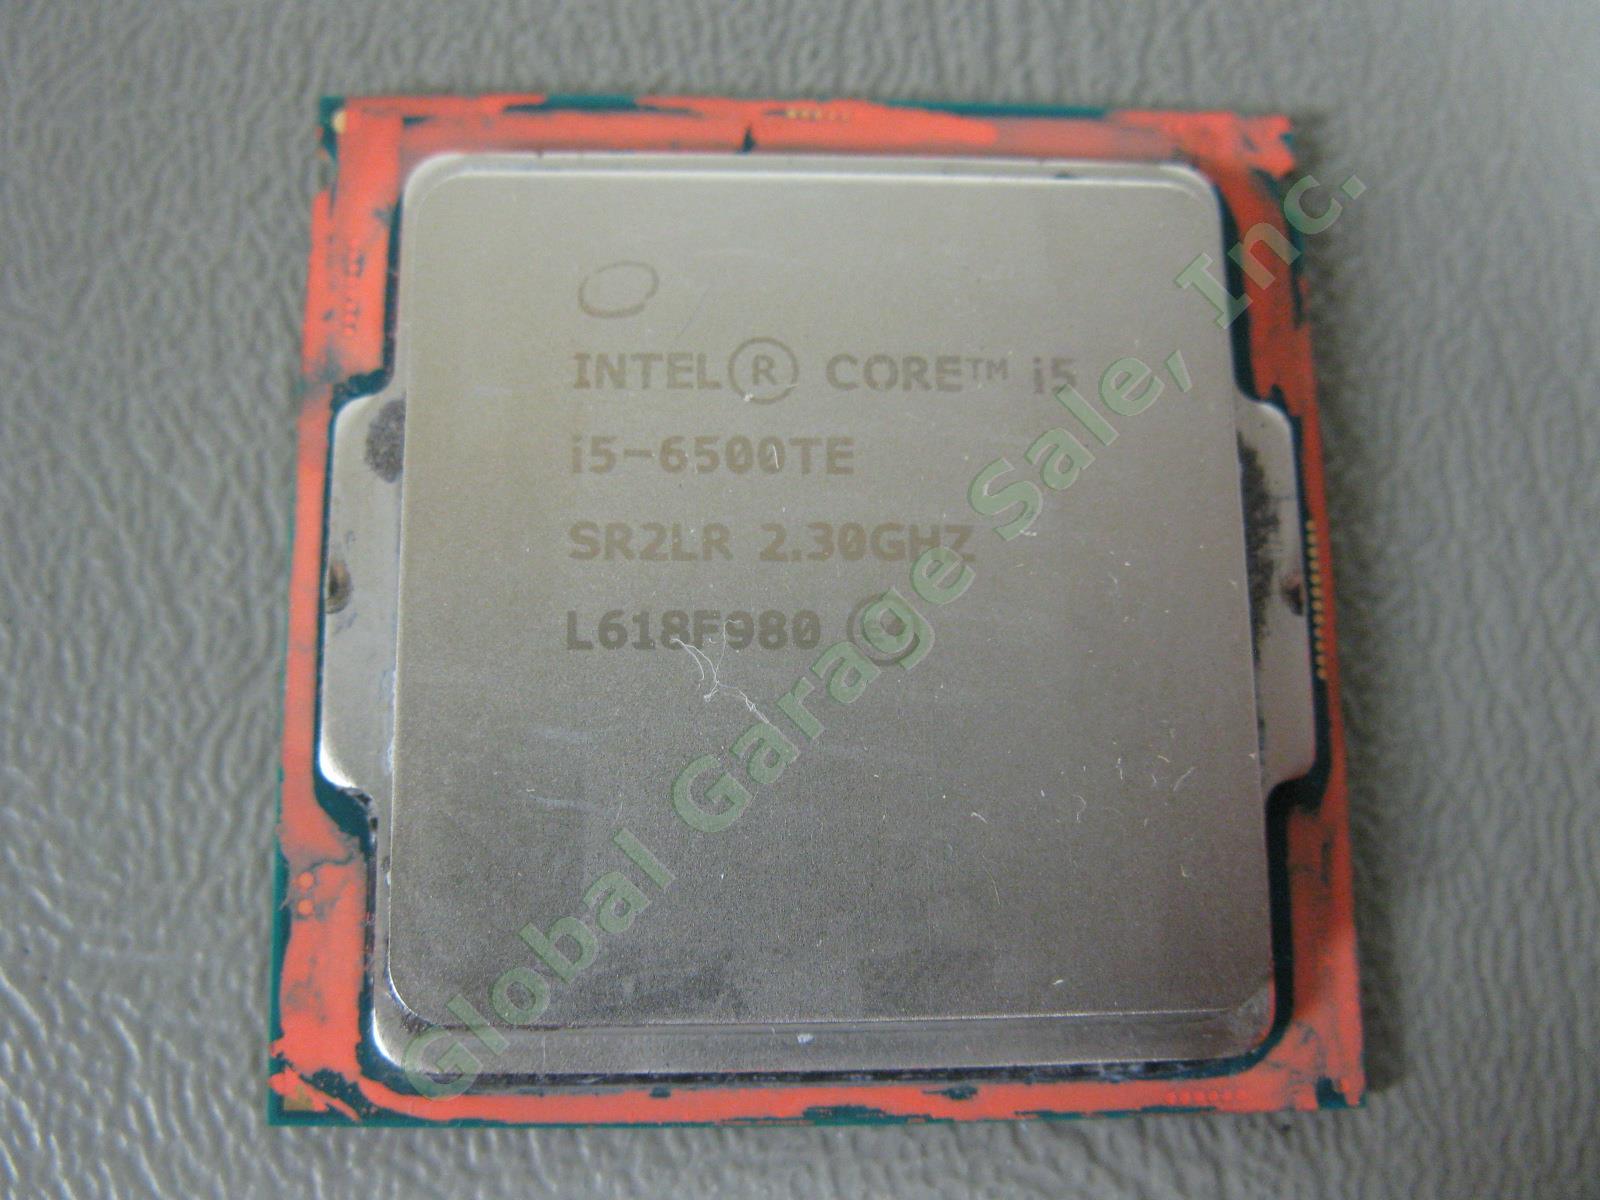 Intel Quad Core i5-6500TE SR2LR 2.3GHZ LGA1151 Skylake CPU Processor 6MB Cache